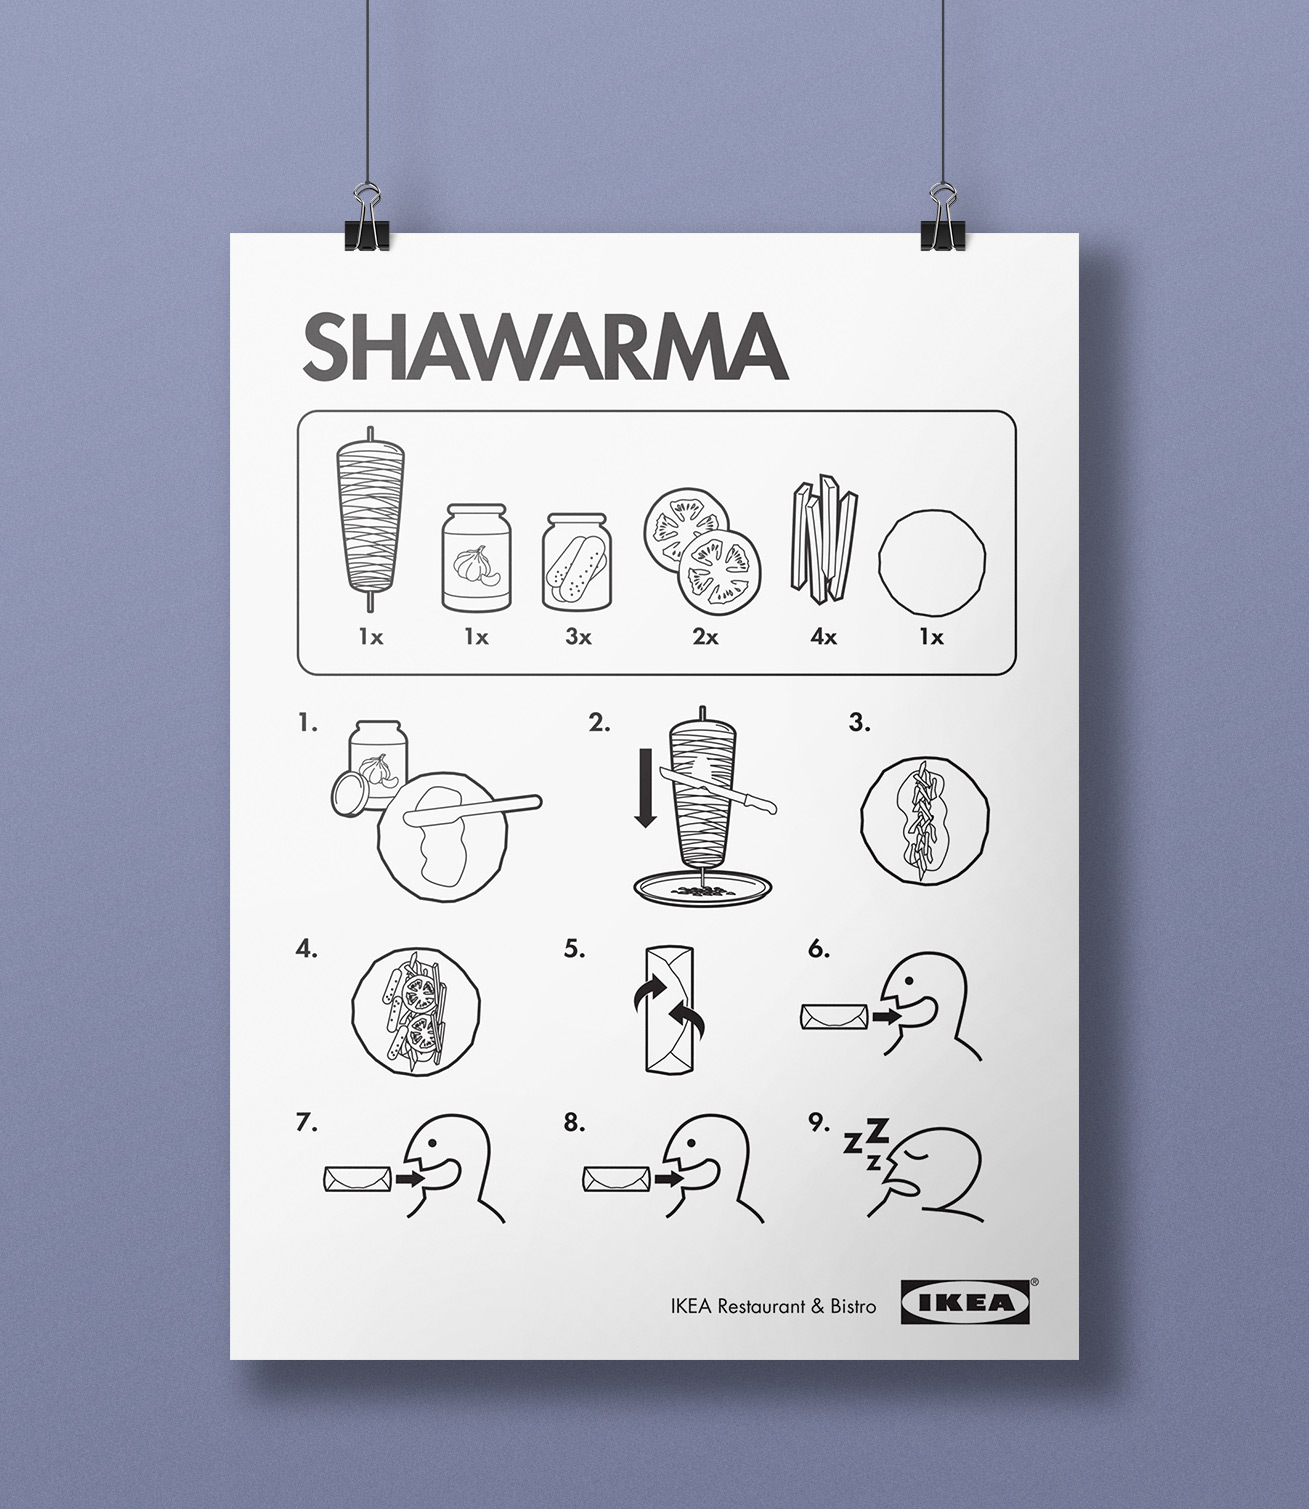 IKEA-shawarma-in-situ2